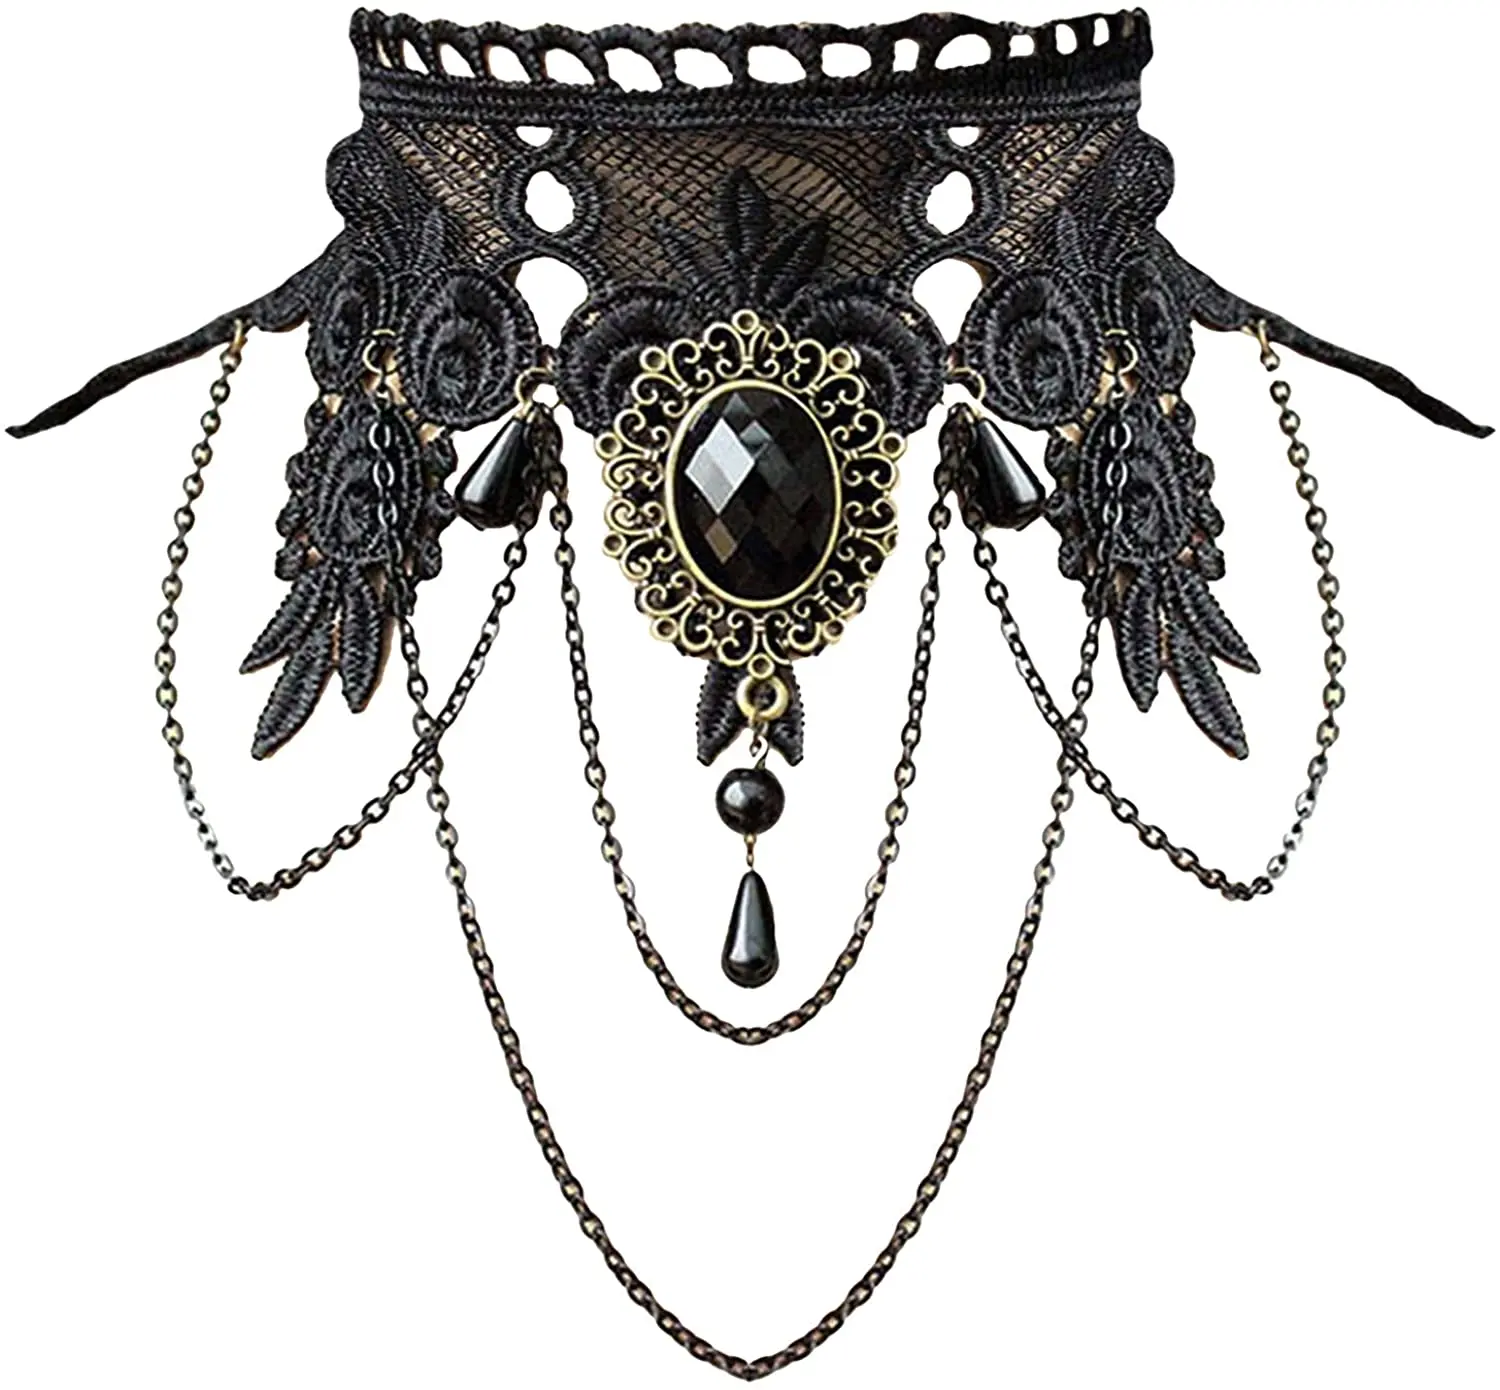 

Vintage Lace Gothic Necklace Lolita Princess Choker Pendant Dark Royalty Choker Black Gothic Chain Necklace